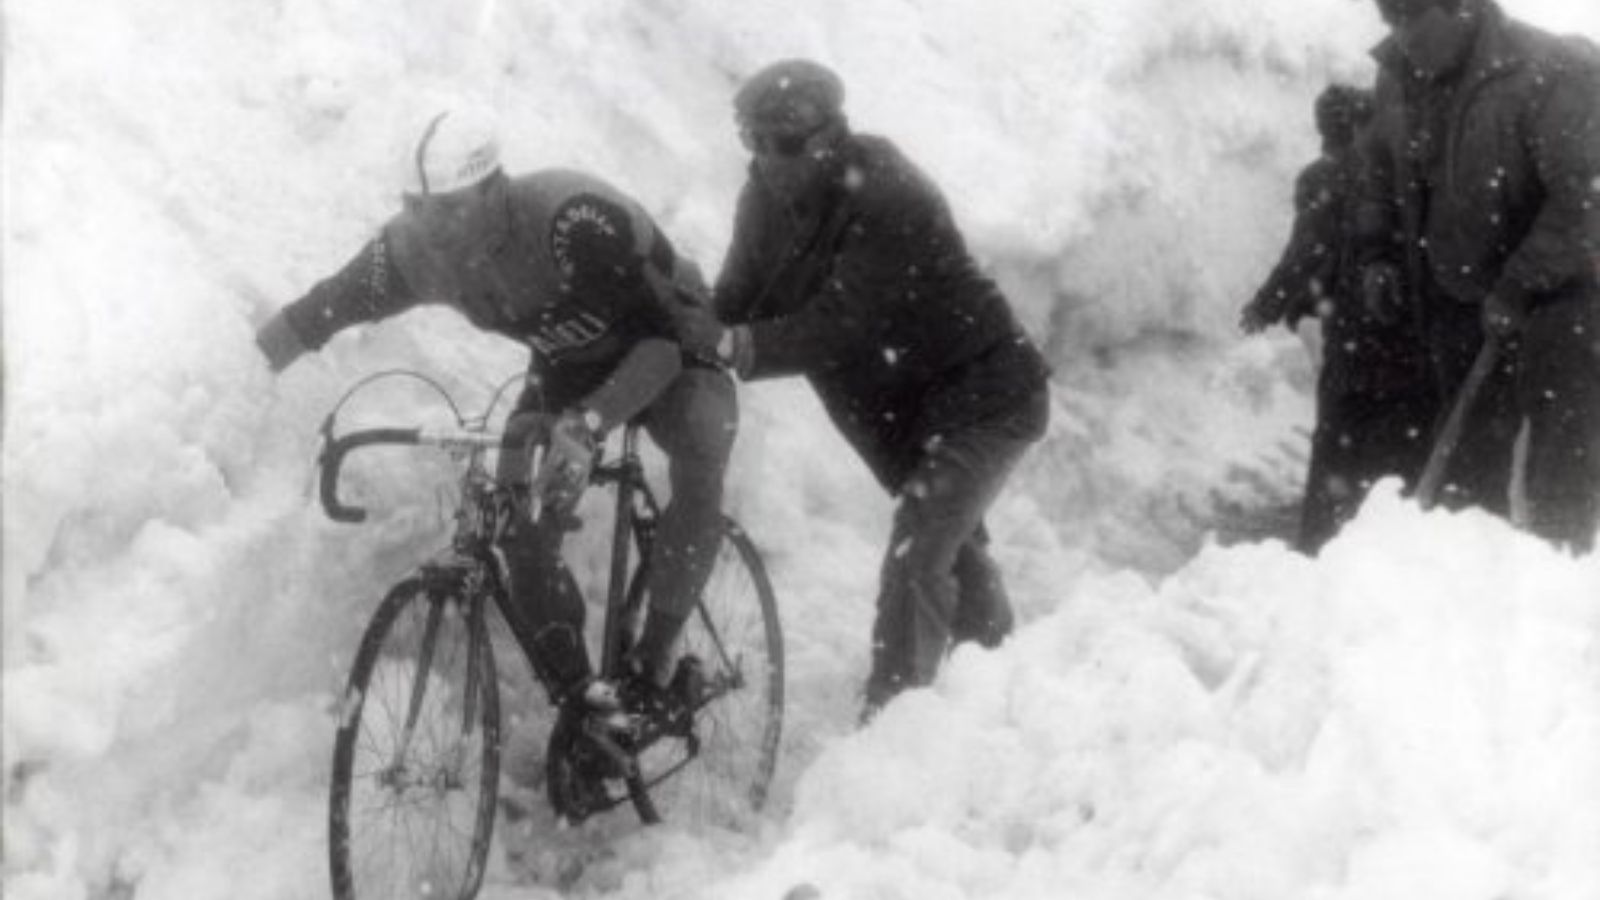 cyclinst struggling the extreme snowy circumstances on the passo stelvio Giro d'Italia 1965